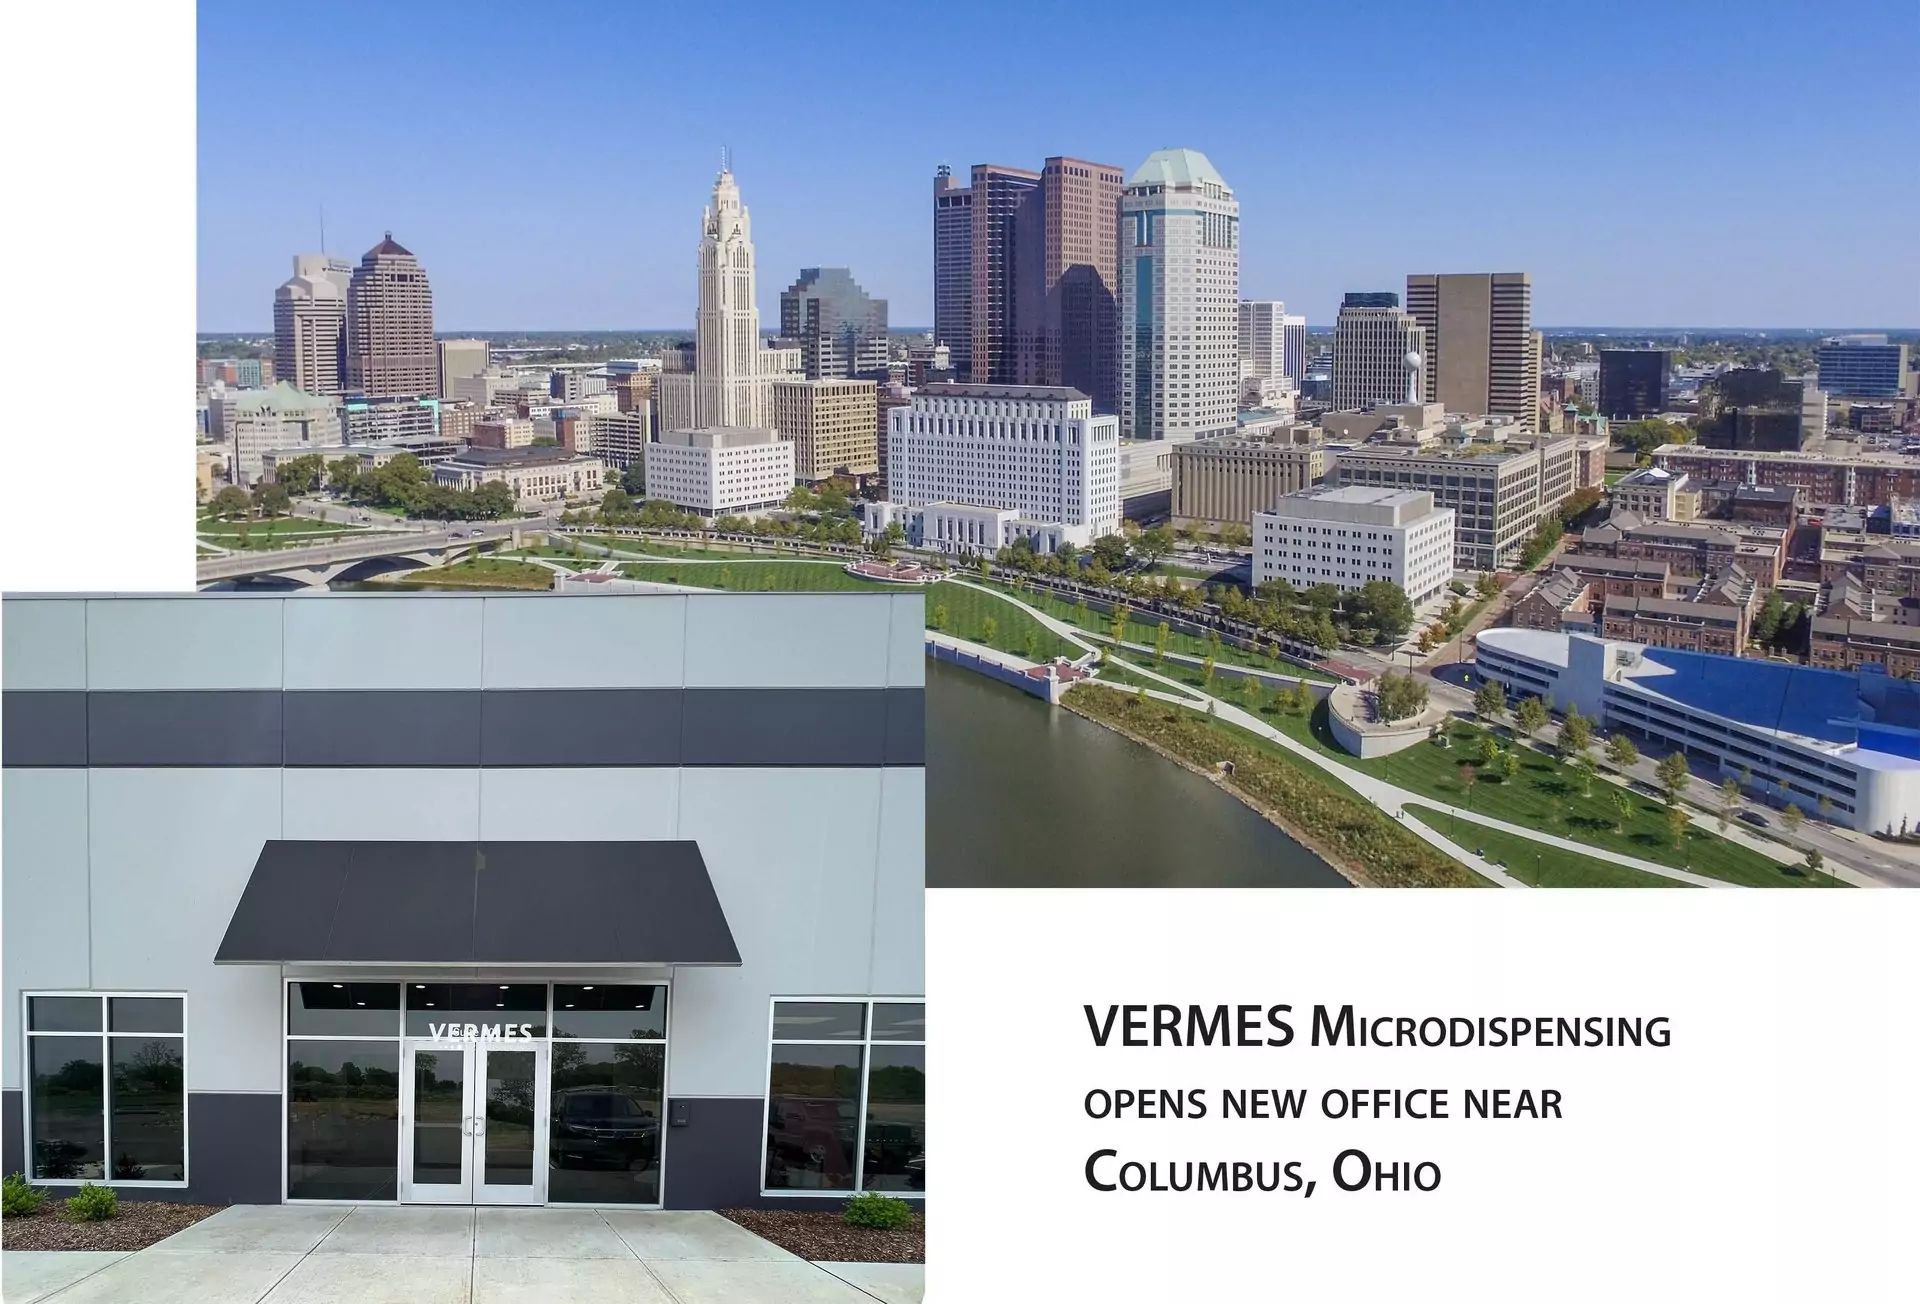 VERMES Microdispensing 在美国中西部新设分公司